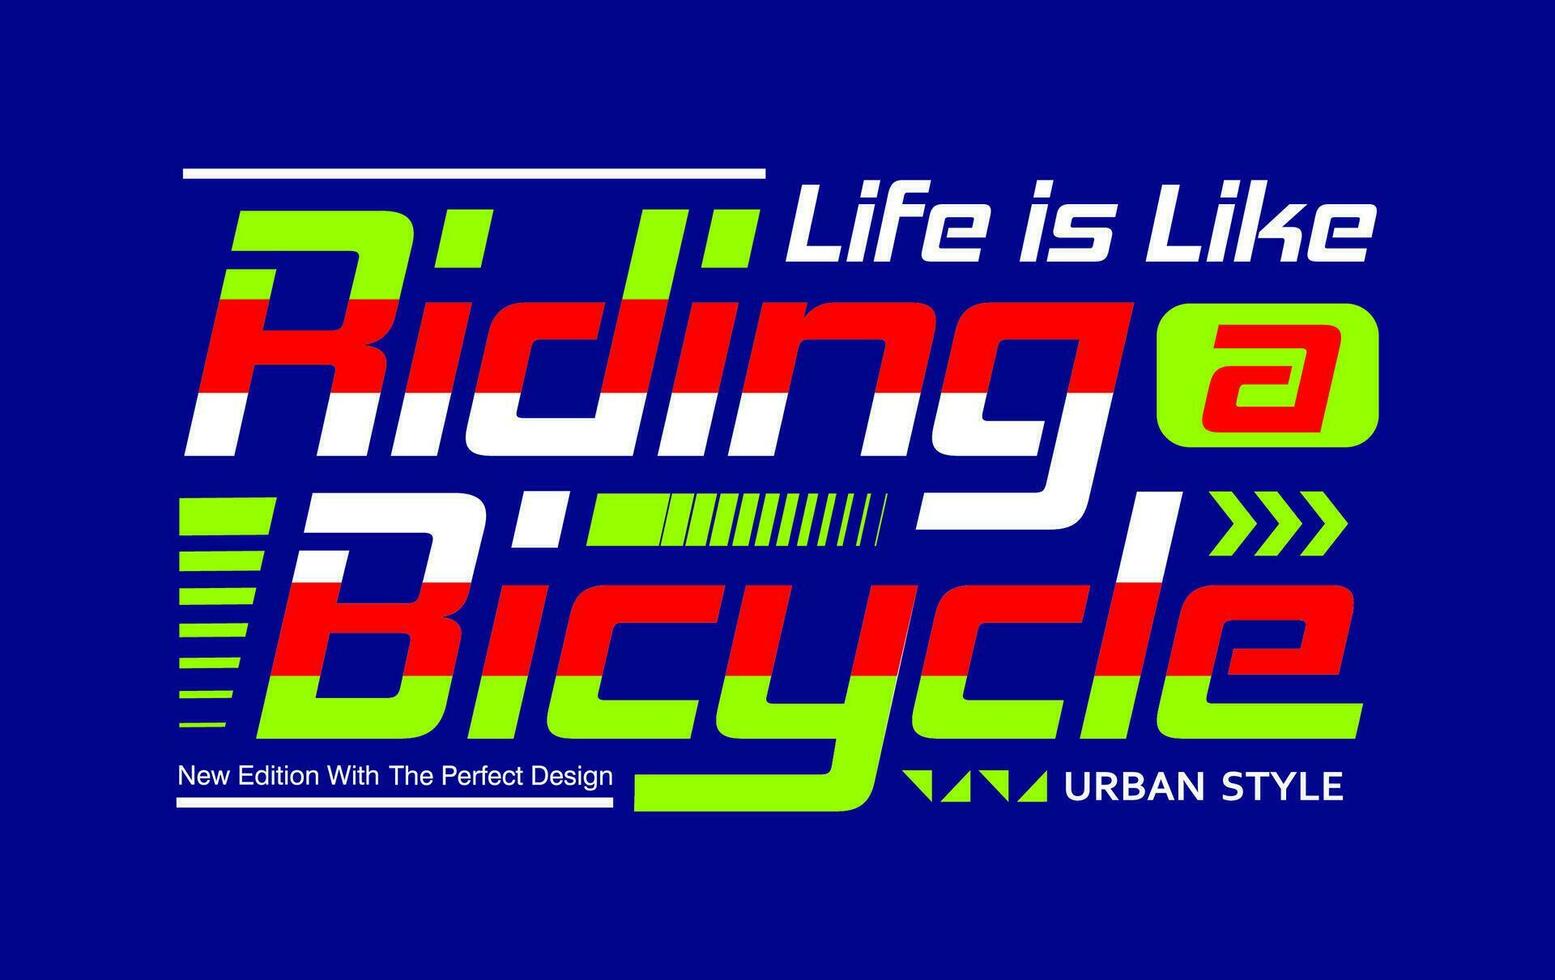 vida es me gusta montando un bicicleta motivación, para camiseta, carteles, etiquetas, etc. vector